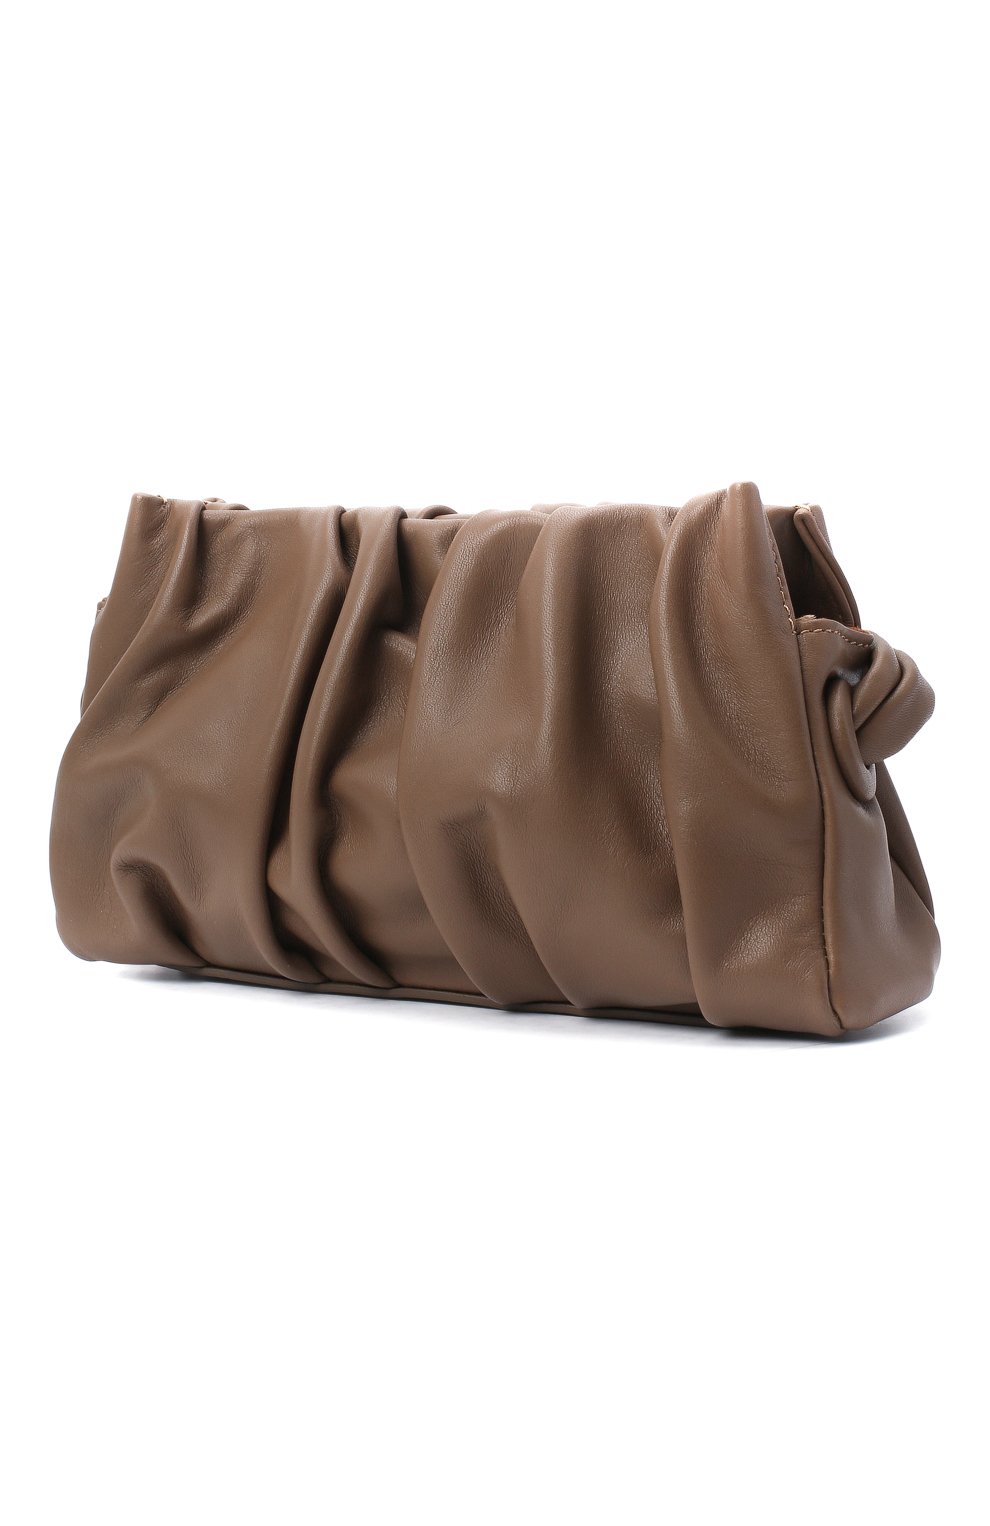 Женская сумка vague small ELLEME темно-коричневого цвета, арт. VAGUE/LEATHER | Фото 3 (Сумки-технические: Сумки чер ез плечо, Сумки top-handle; Материал: Натуральная кожа; Размер: small)